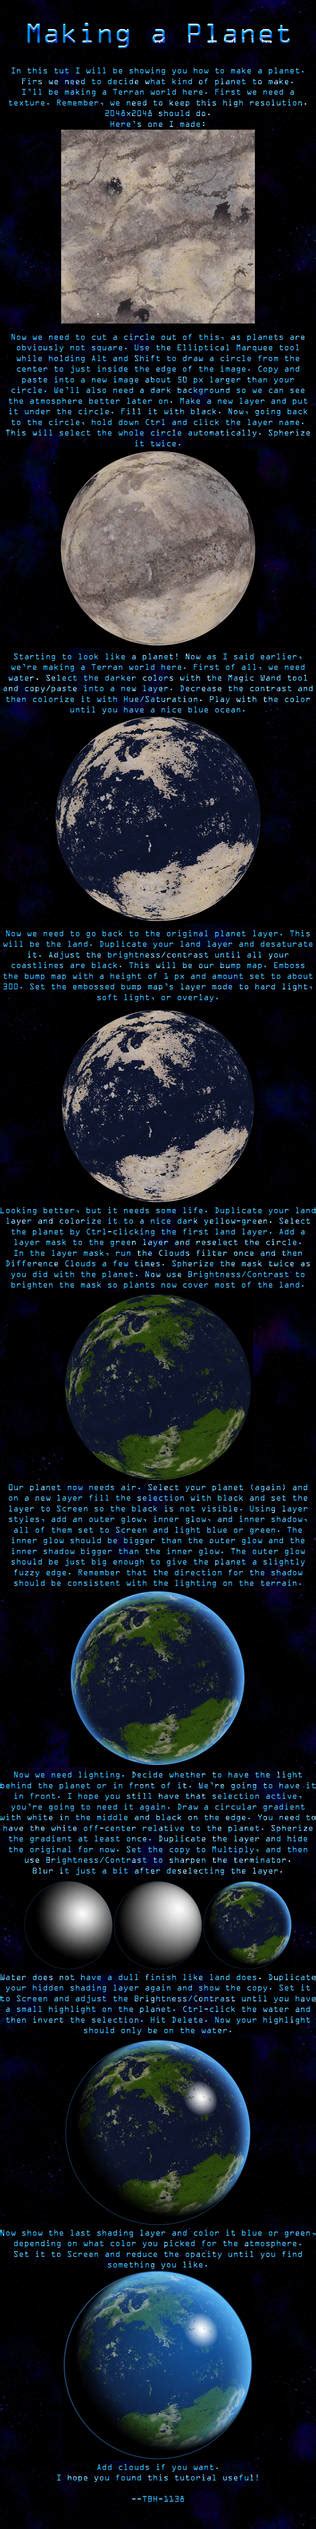 Terran Planet Tutorial By Tbh 1138 On Deviantart